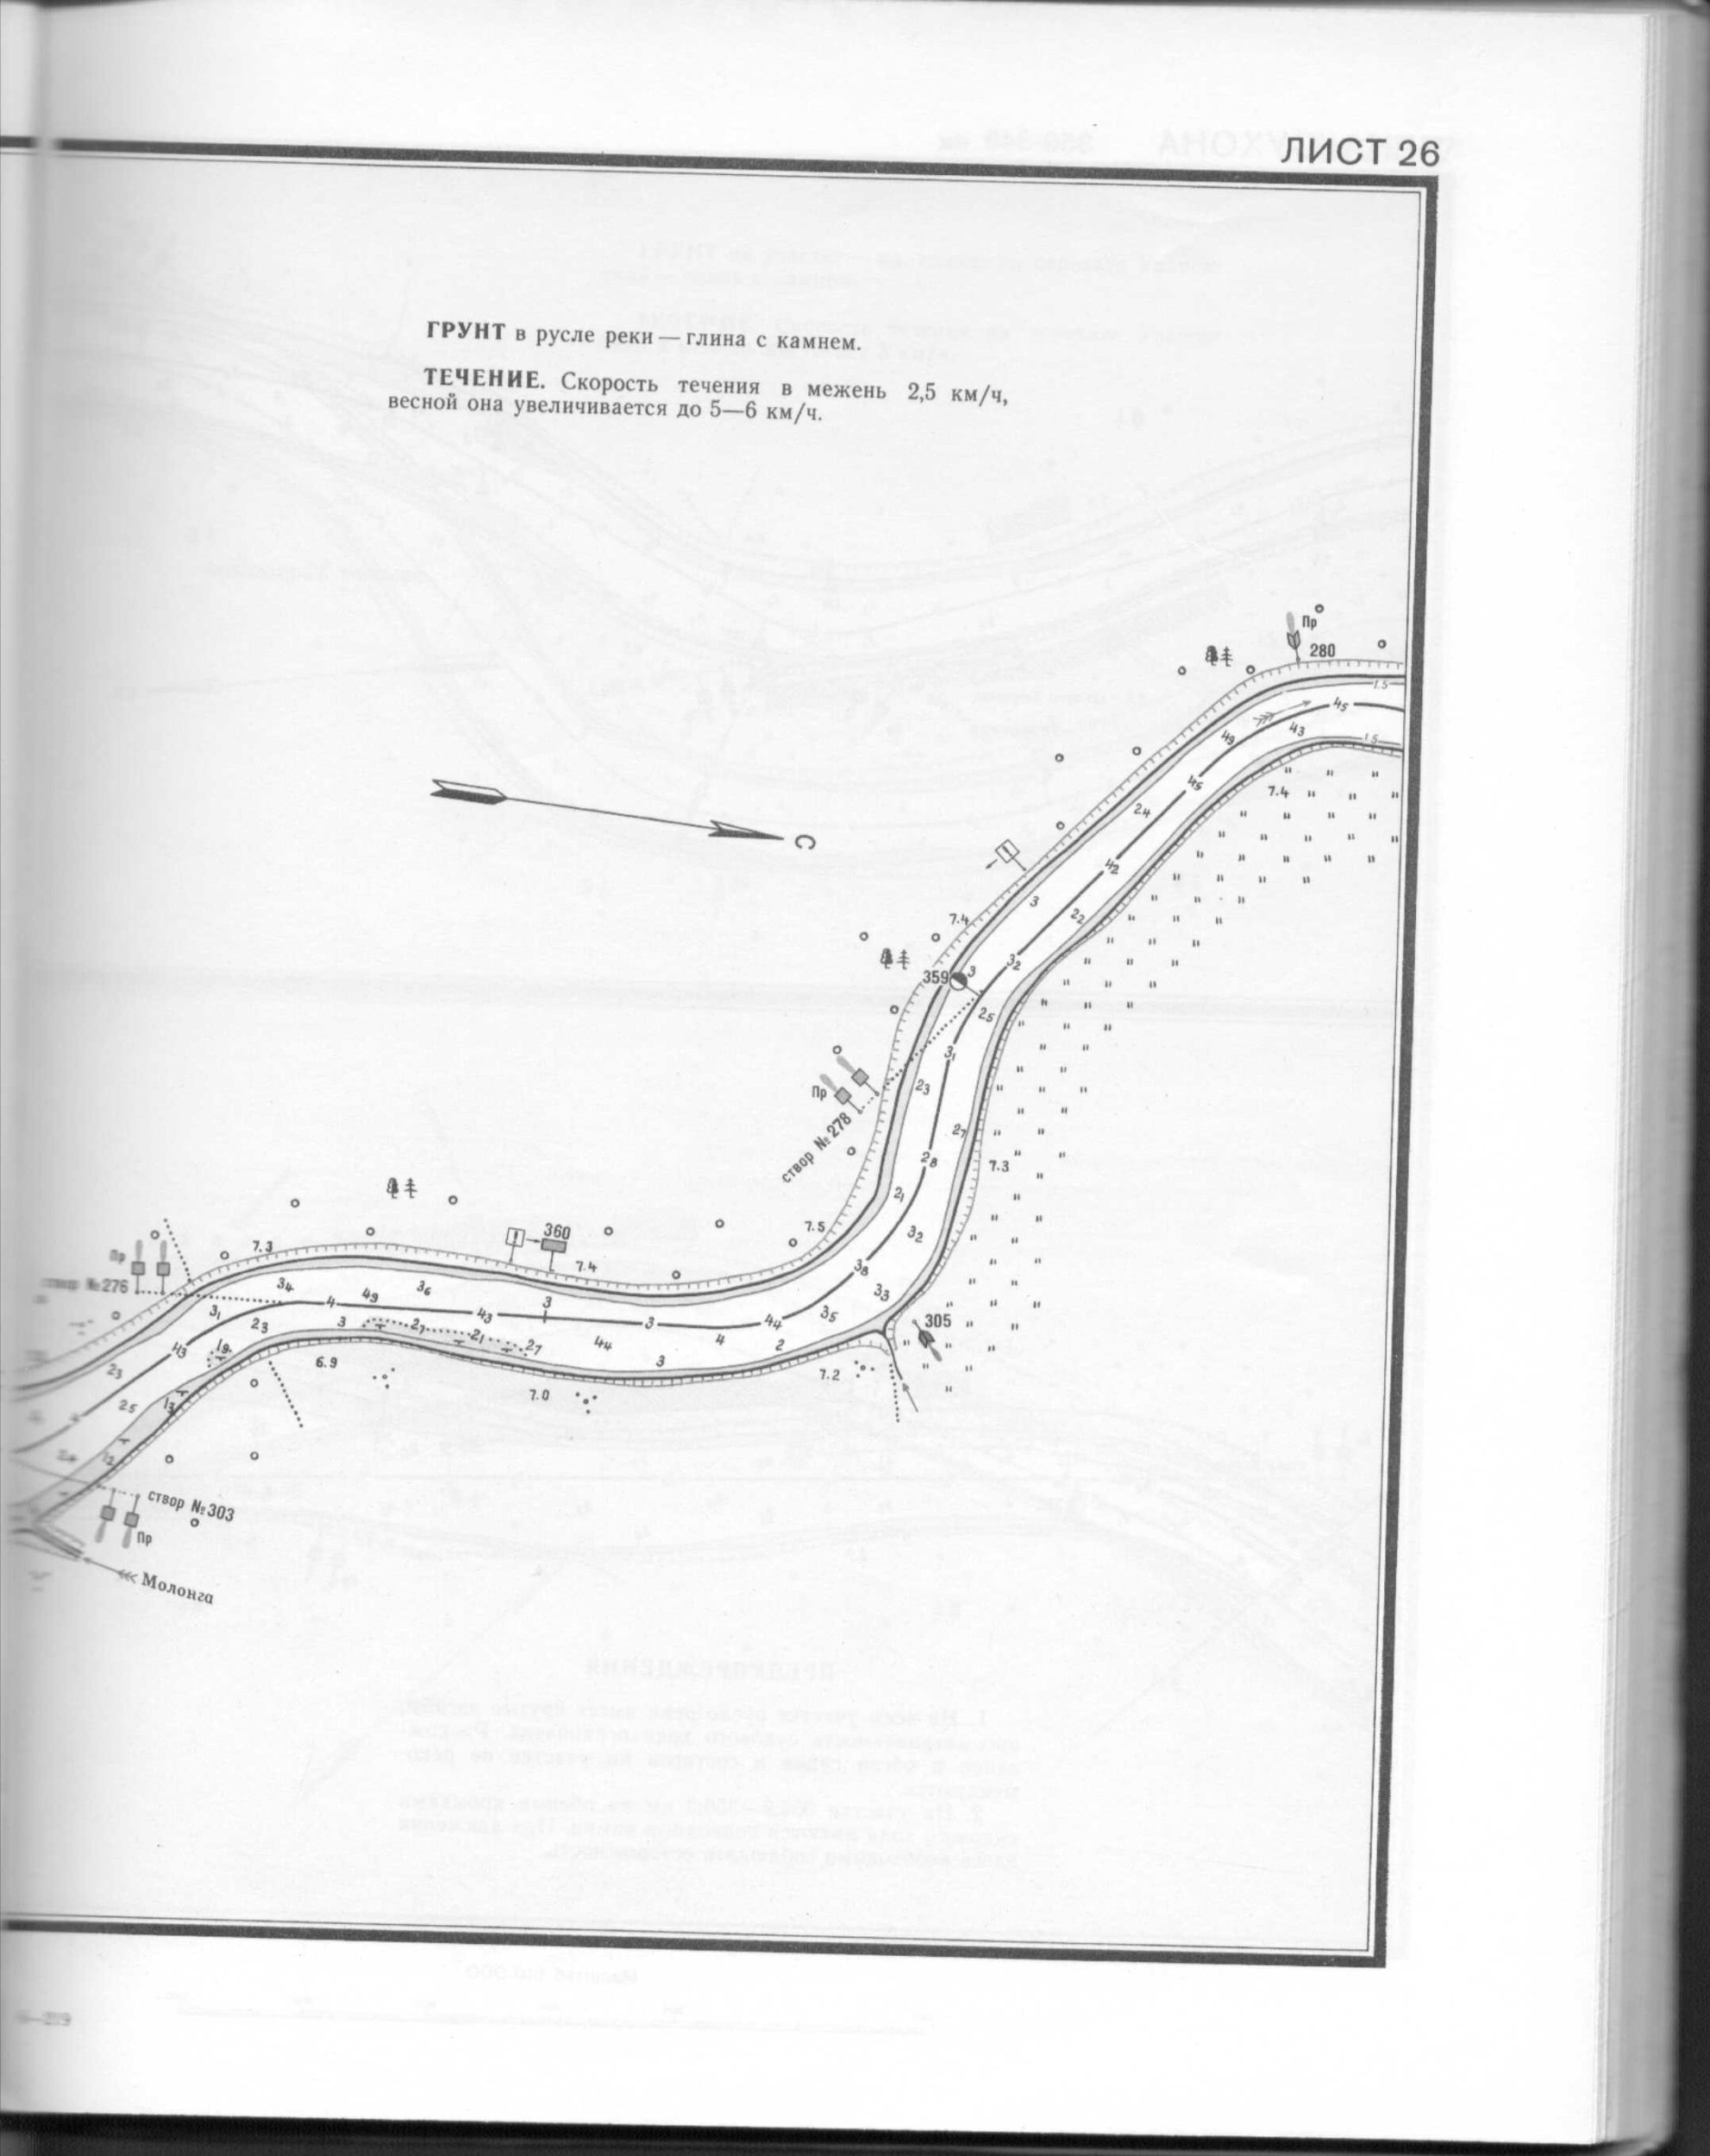 Лоция реки Сухона Вологодская. Река Сухона на карте. Схема реки Сухоны. Река Сухона карта глубин.